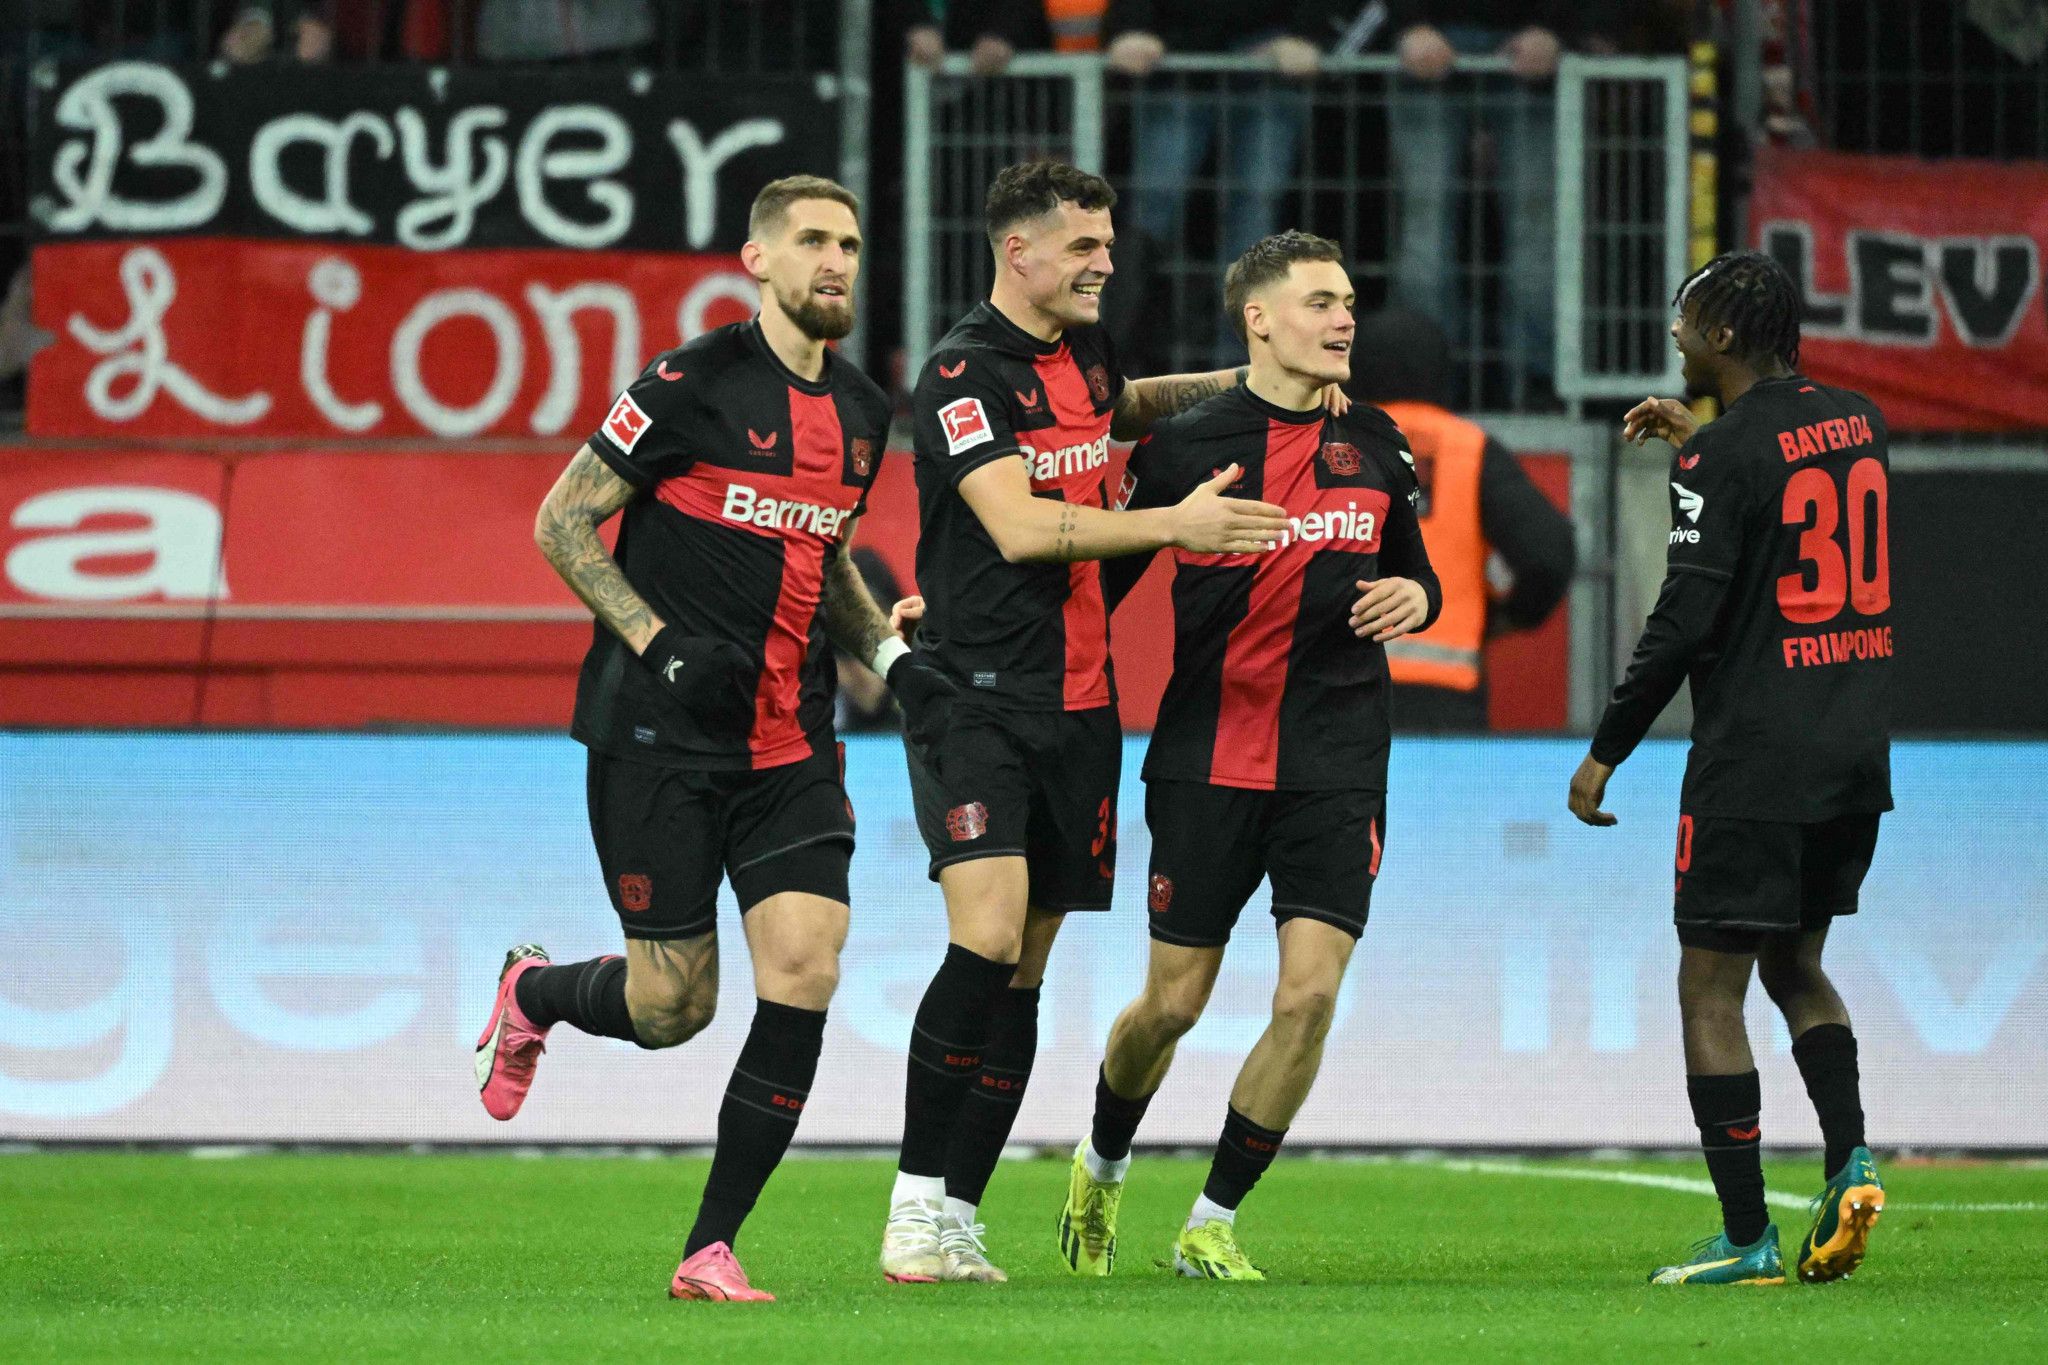 Xhaka marque son premier but avec Leverkusen qui bat un record